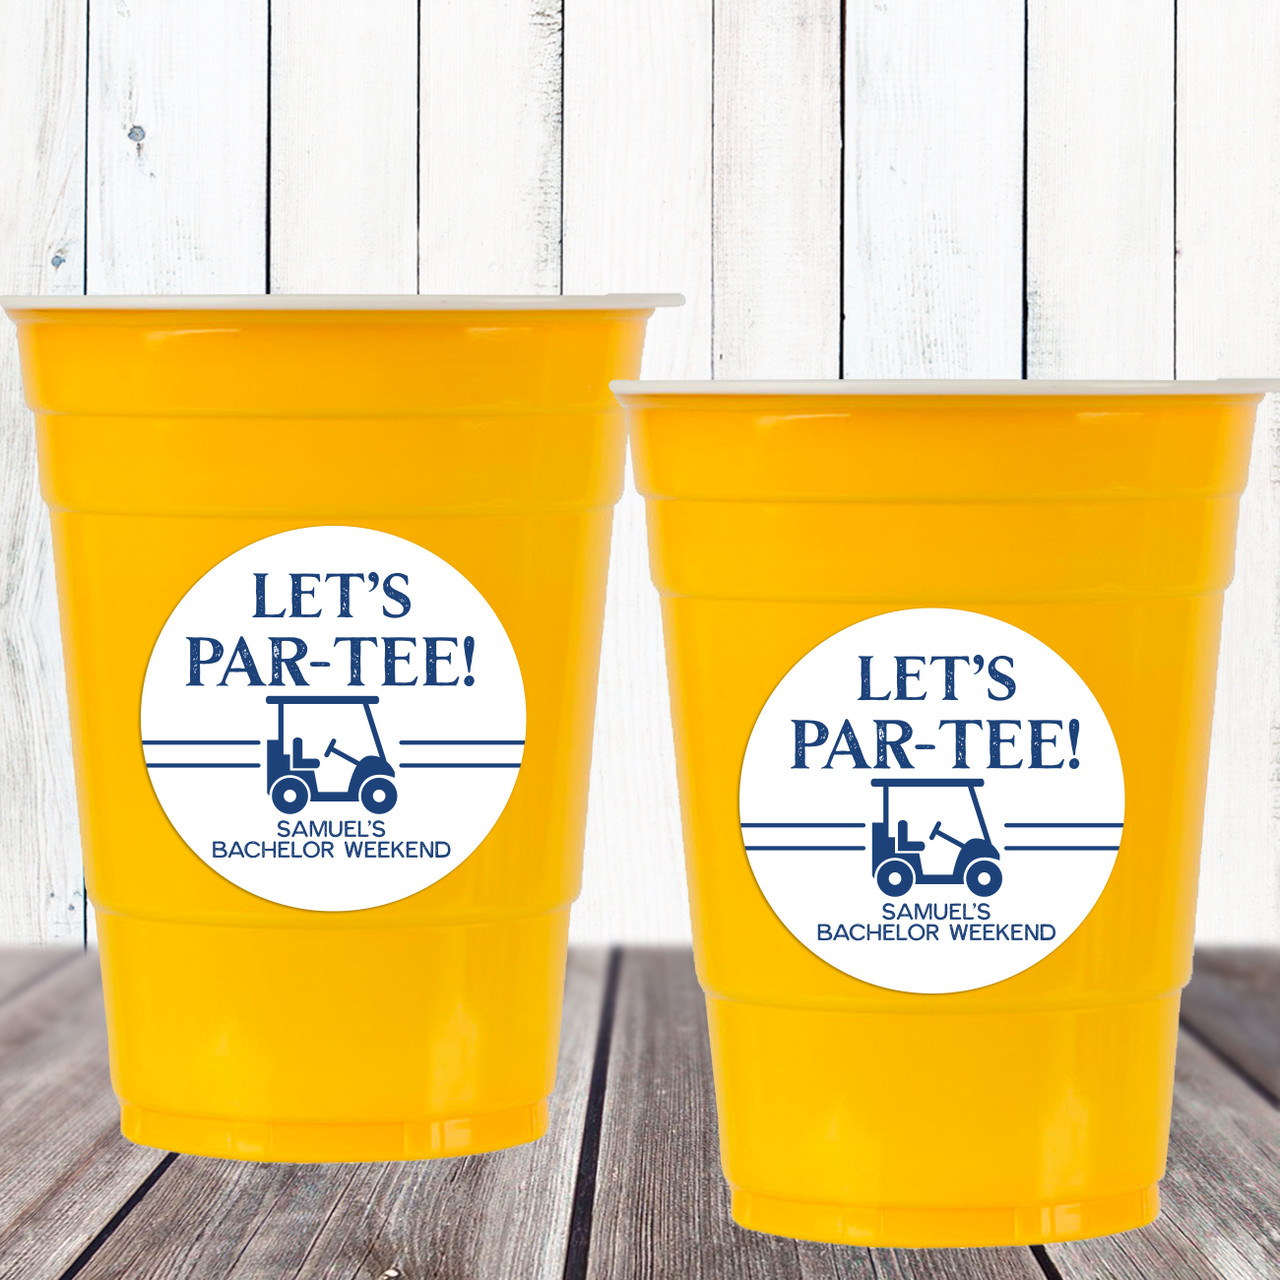 Golf Par-Tee Custom Party Favor Labels - Plastic Cup Stickers